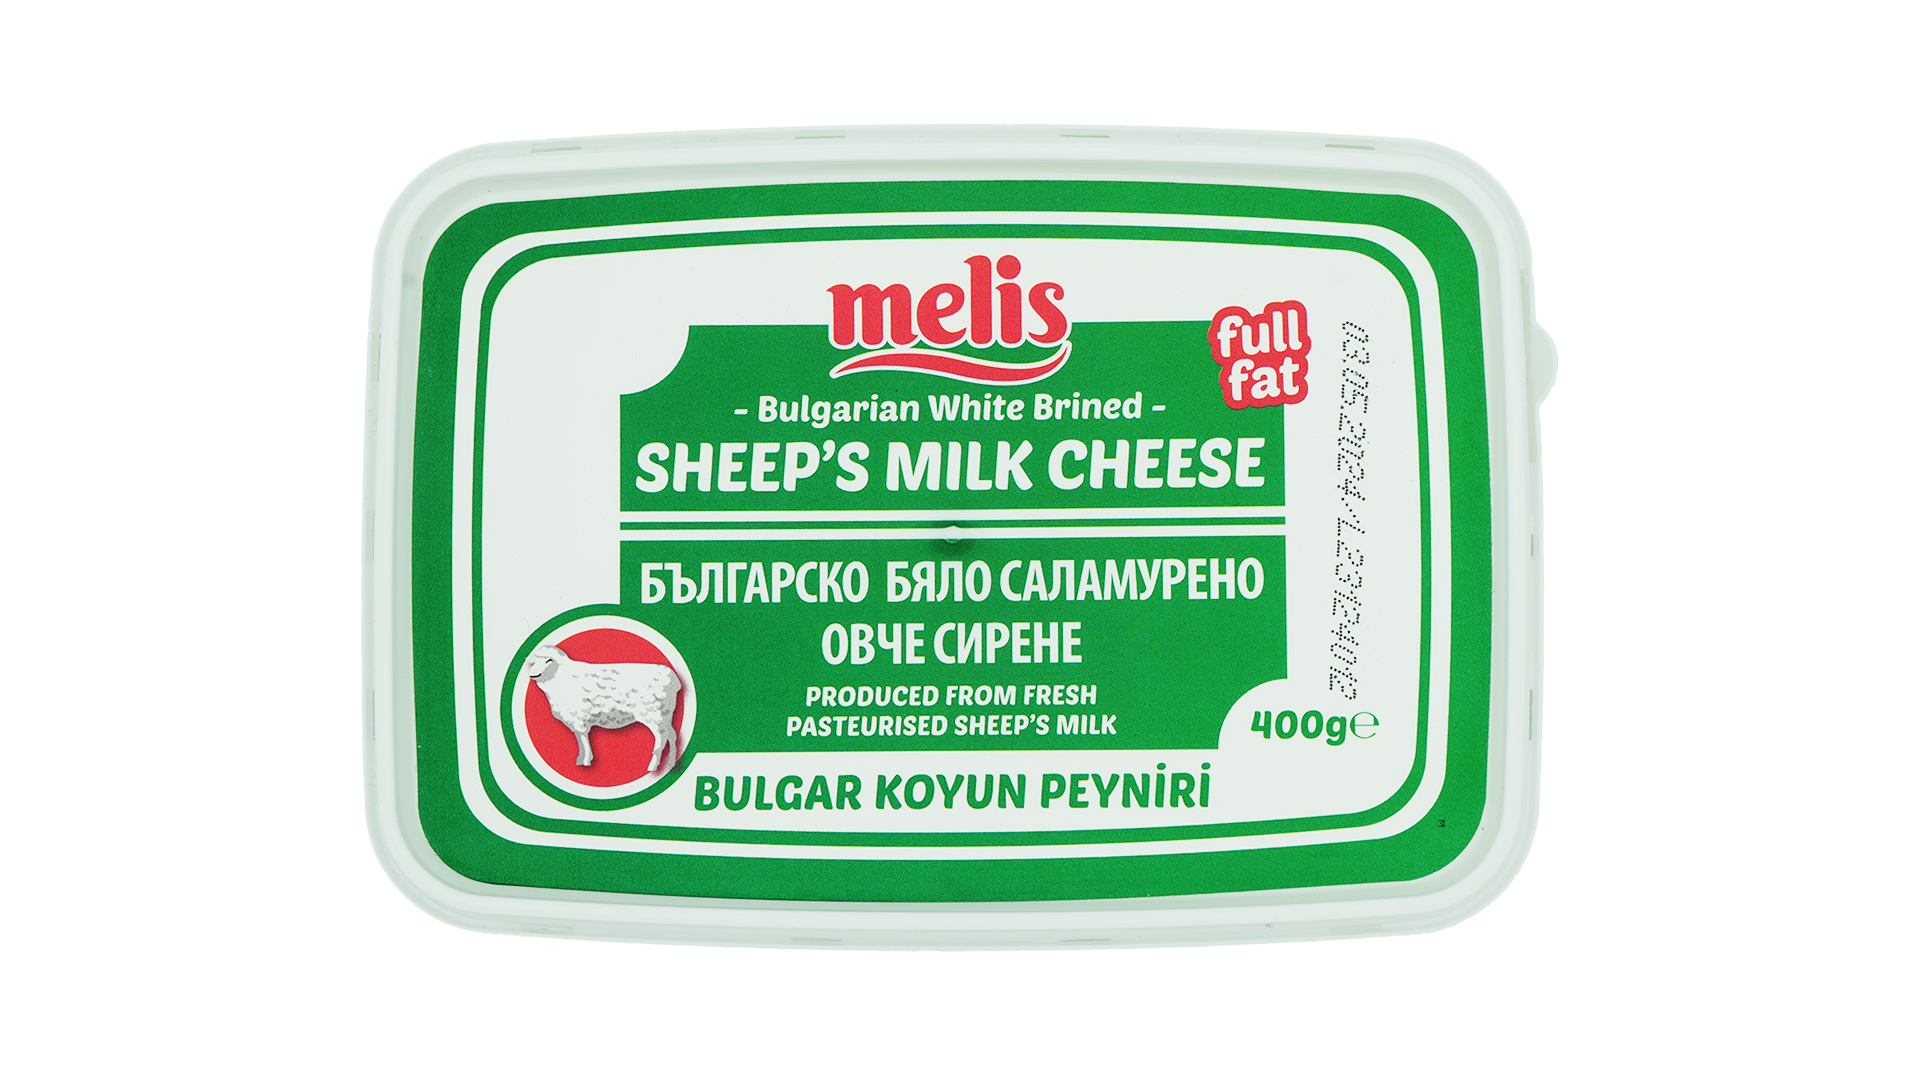 Melis sheepss milk cheese 400g 1